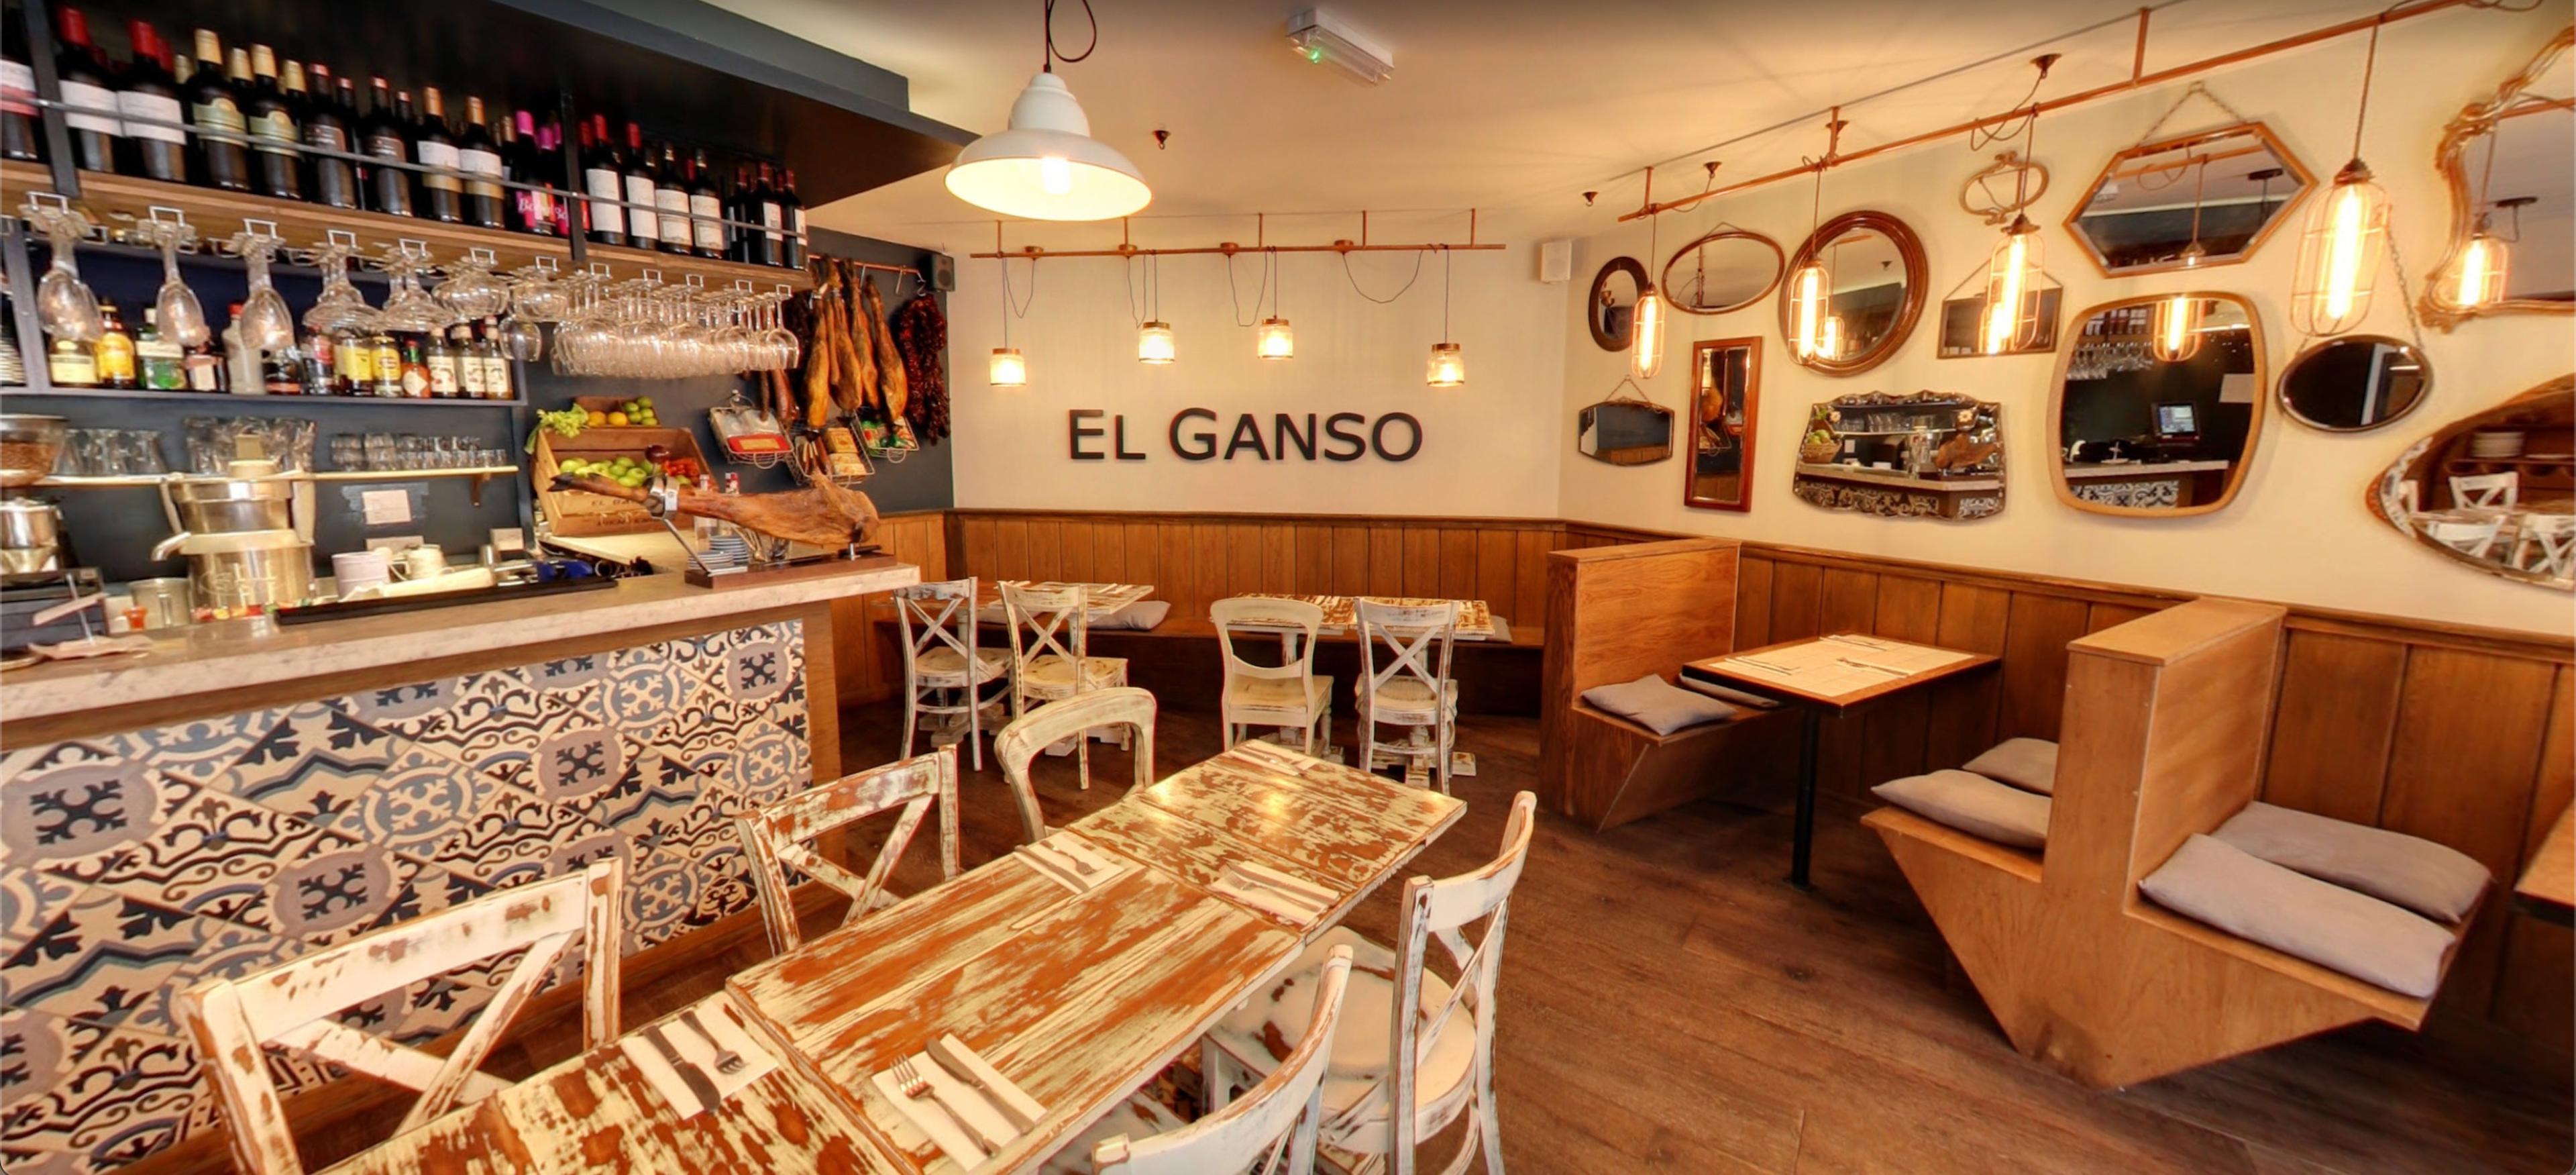 El Ganso Cafe